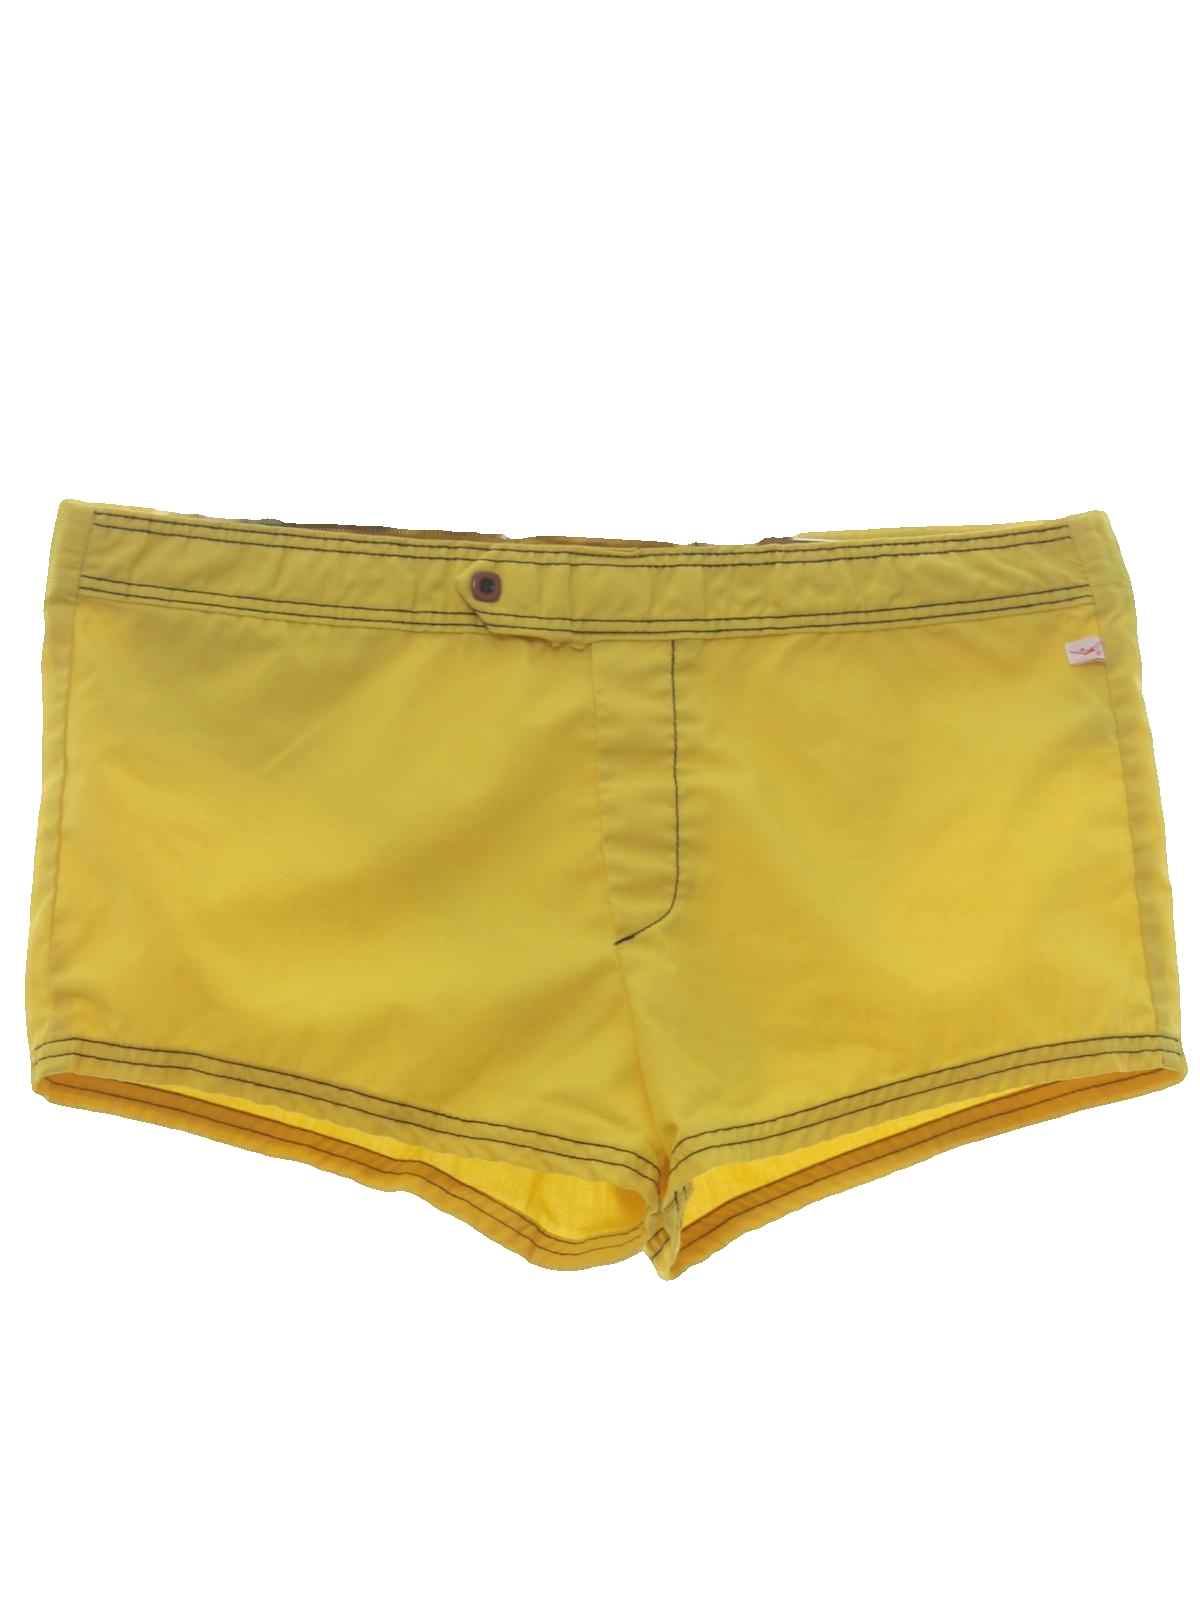 Vintage 1960's Swimsuit/Swimwear: 60s -Jantzen- Mens bright yellow ...